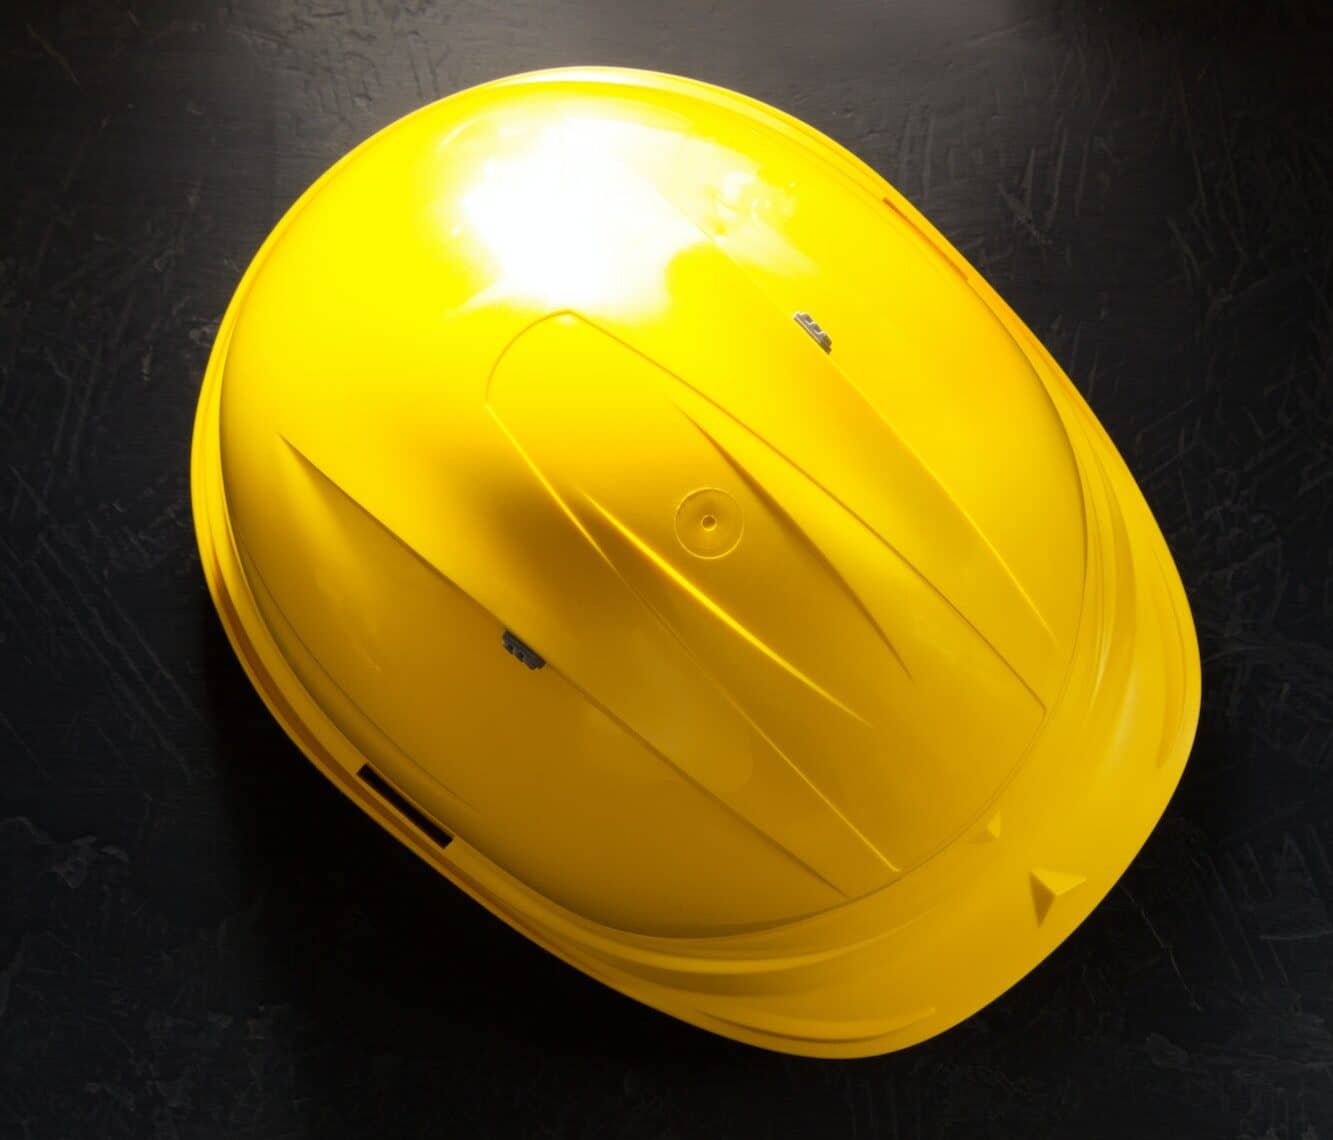 construction helmet on black